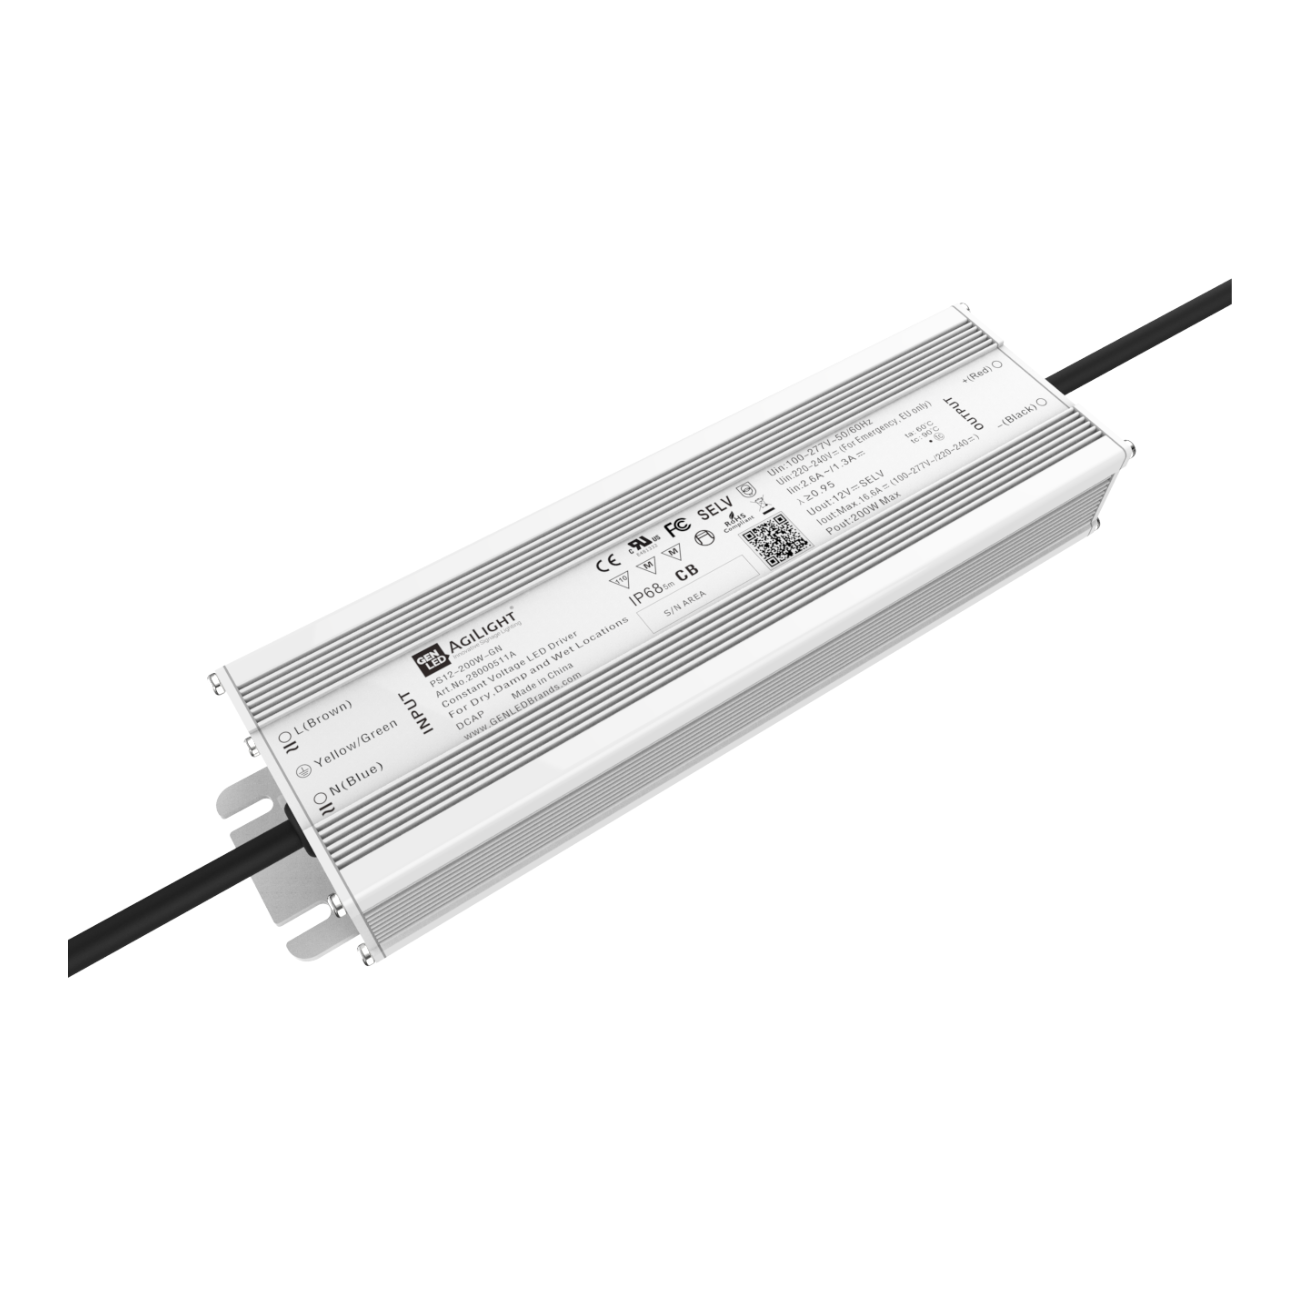 AgiLight PS12-200W-GN (200W/12V) LED-Netzteil